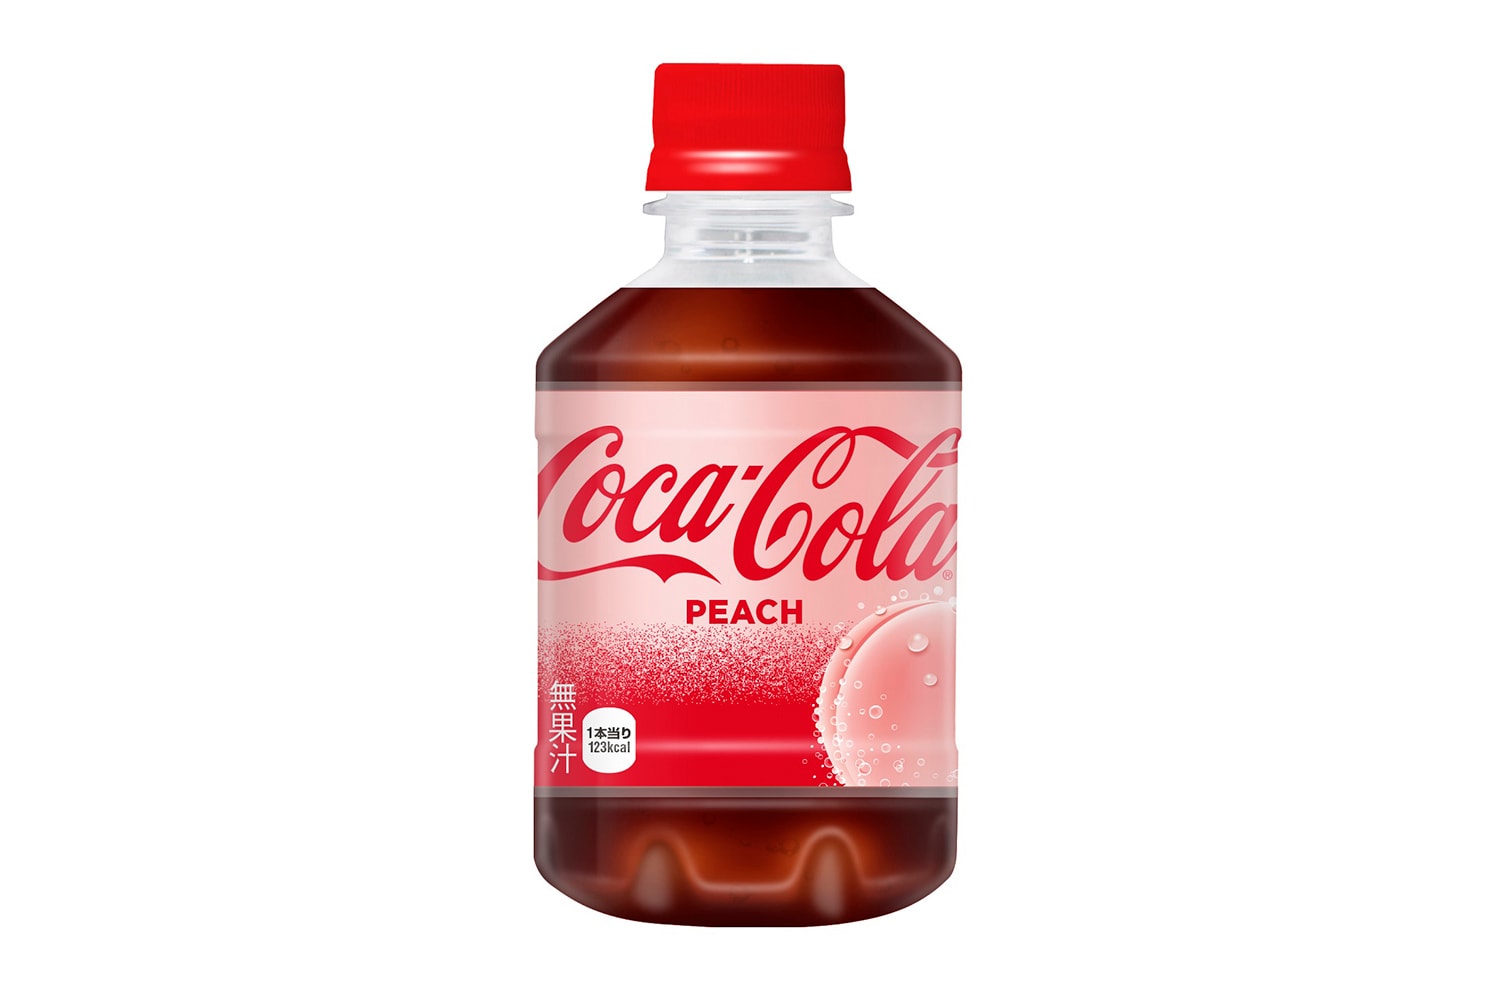 Peach Coca-Cola Japan Release